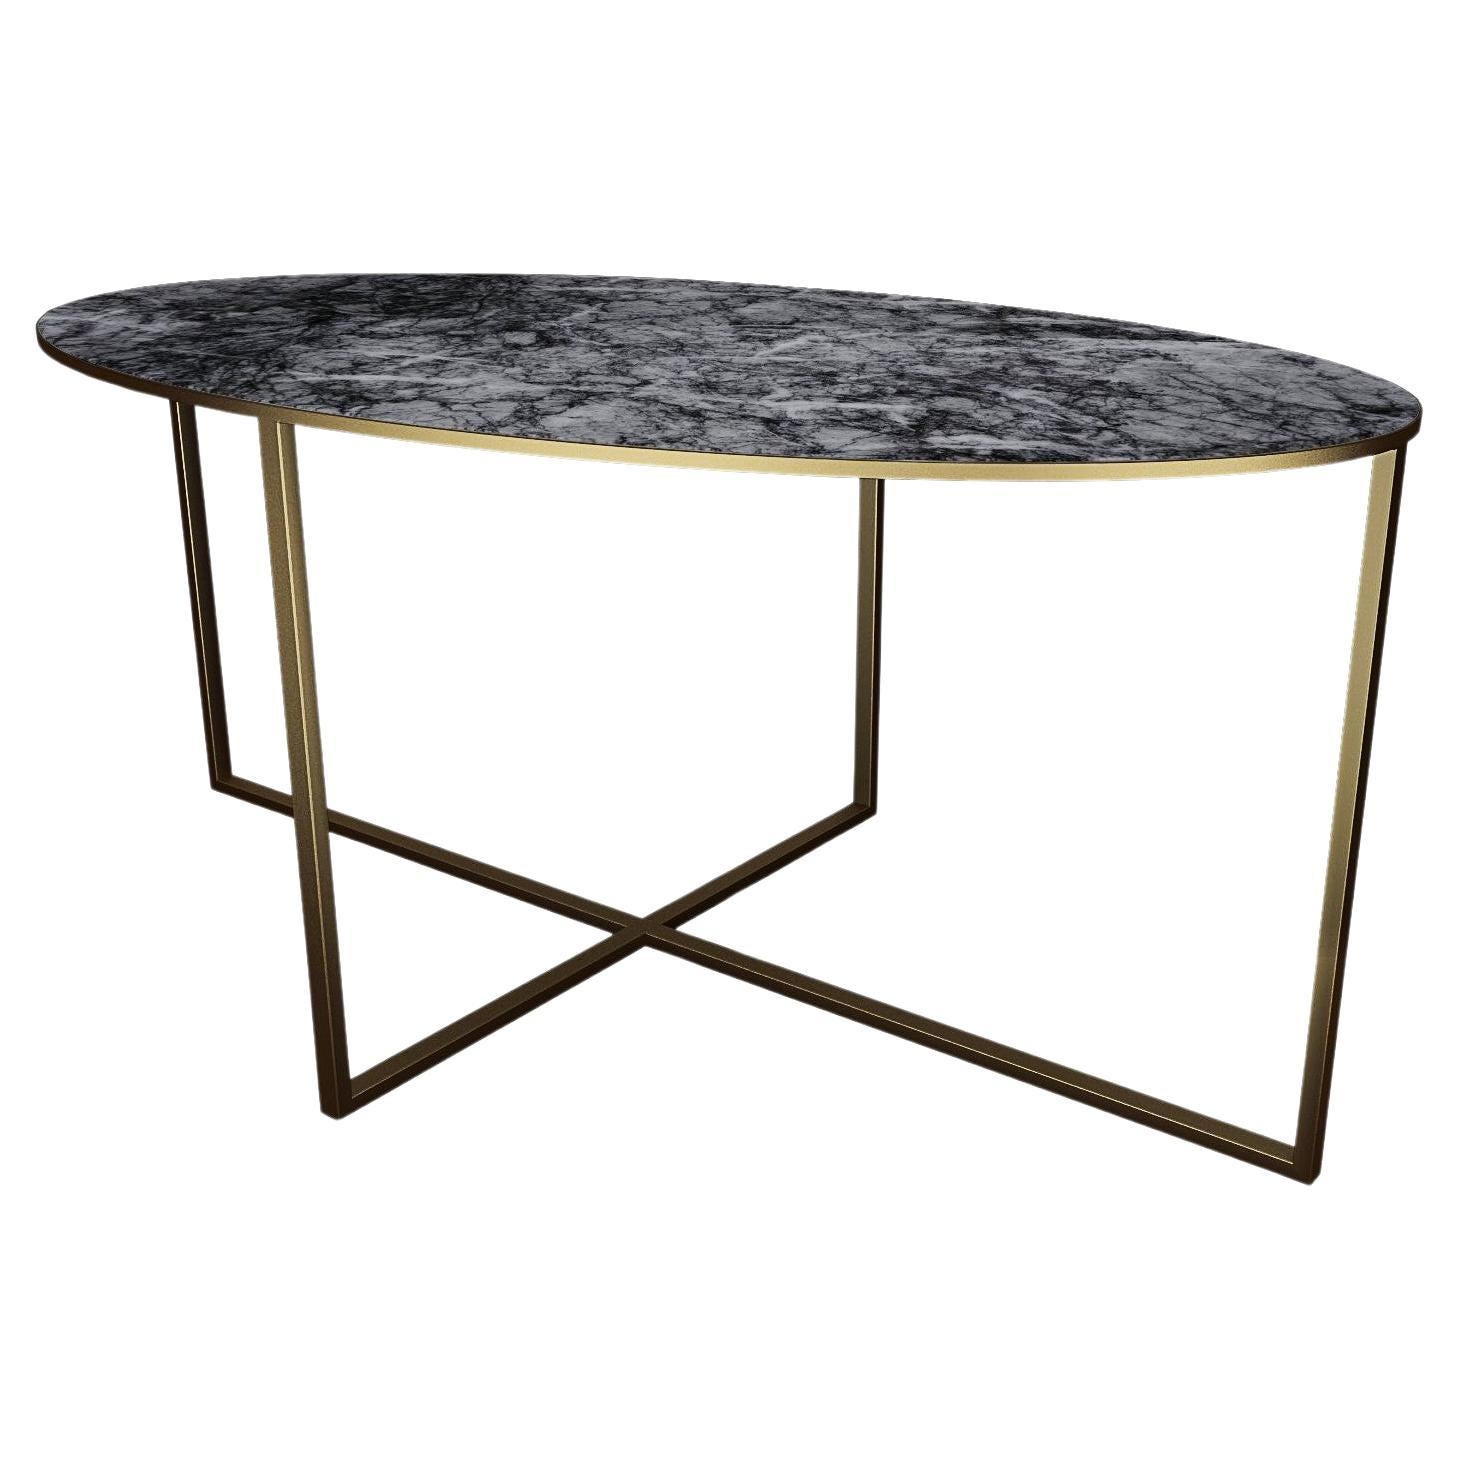 NORDST MIA Dining Table, Italian Grey Rain Marble, Danish Modern Design, New For Sale